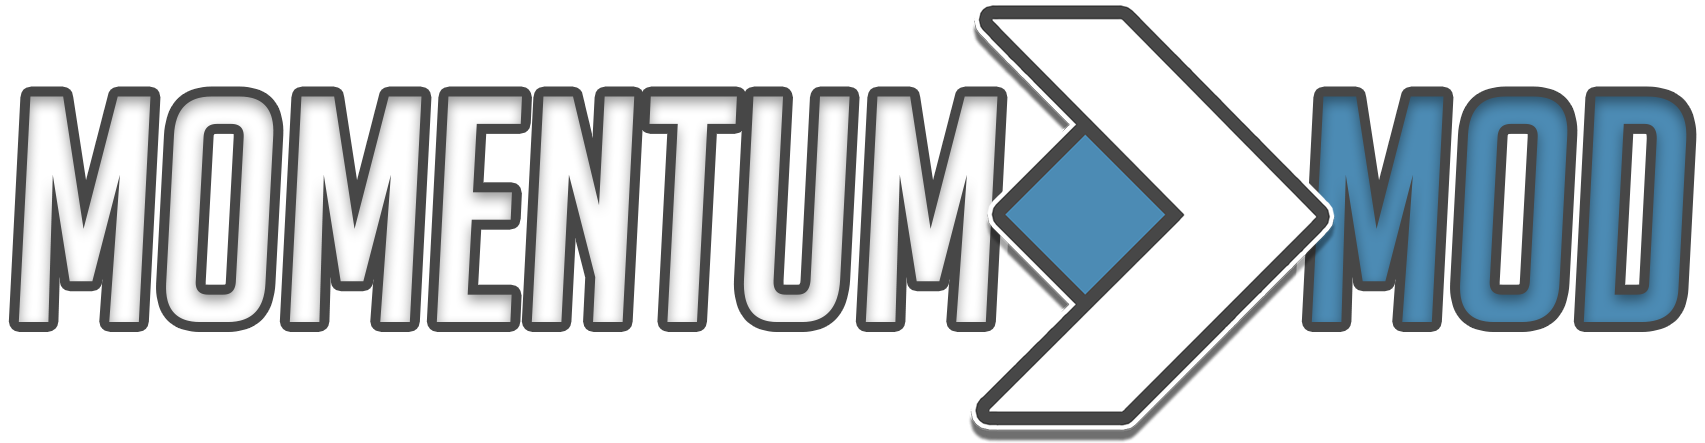 Momentum Mod Logo